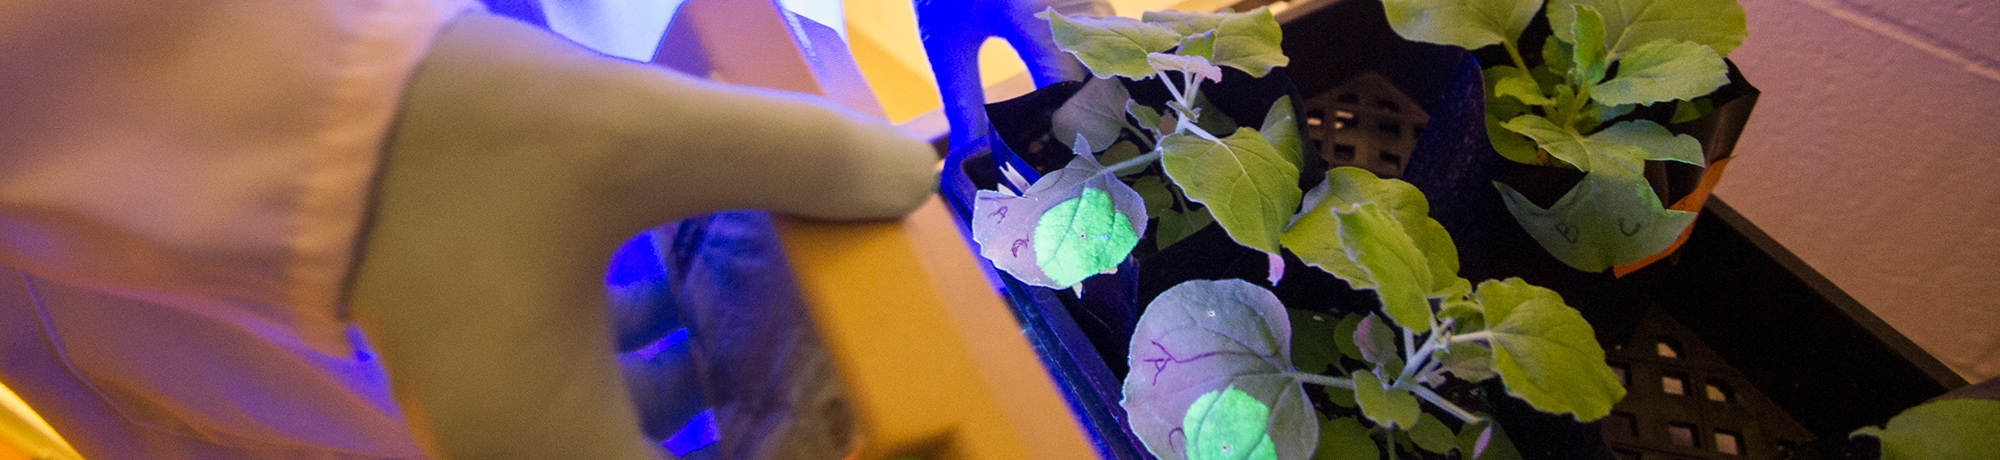 biometric scanner shining blue light on plant